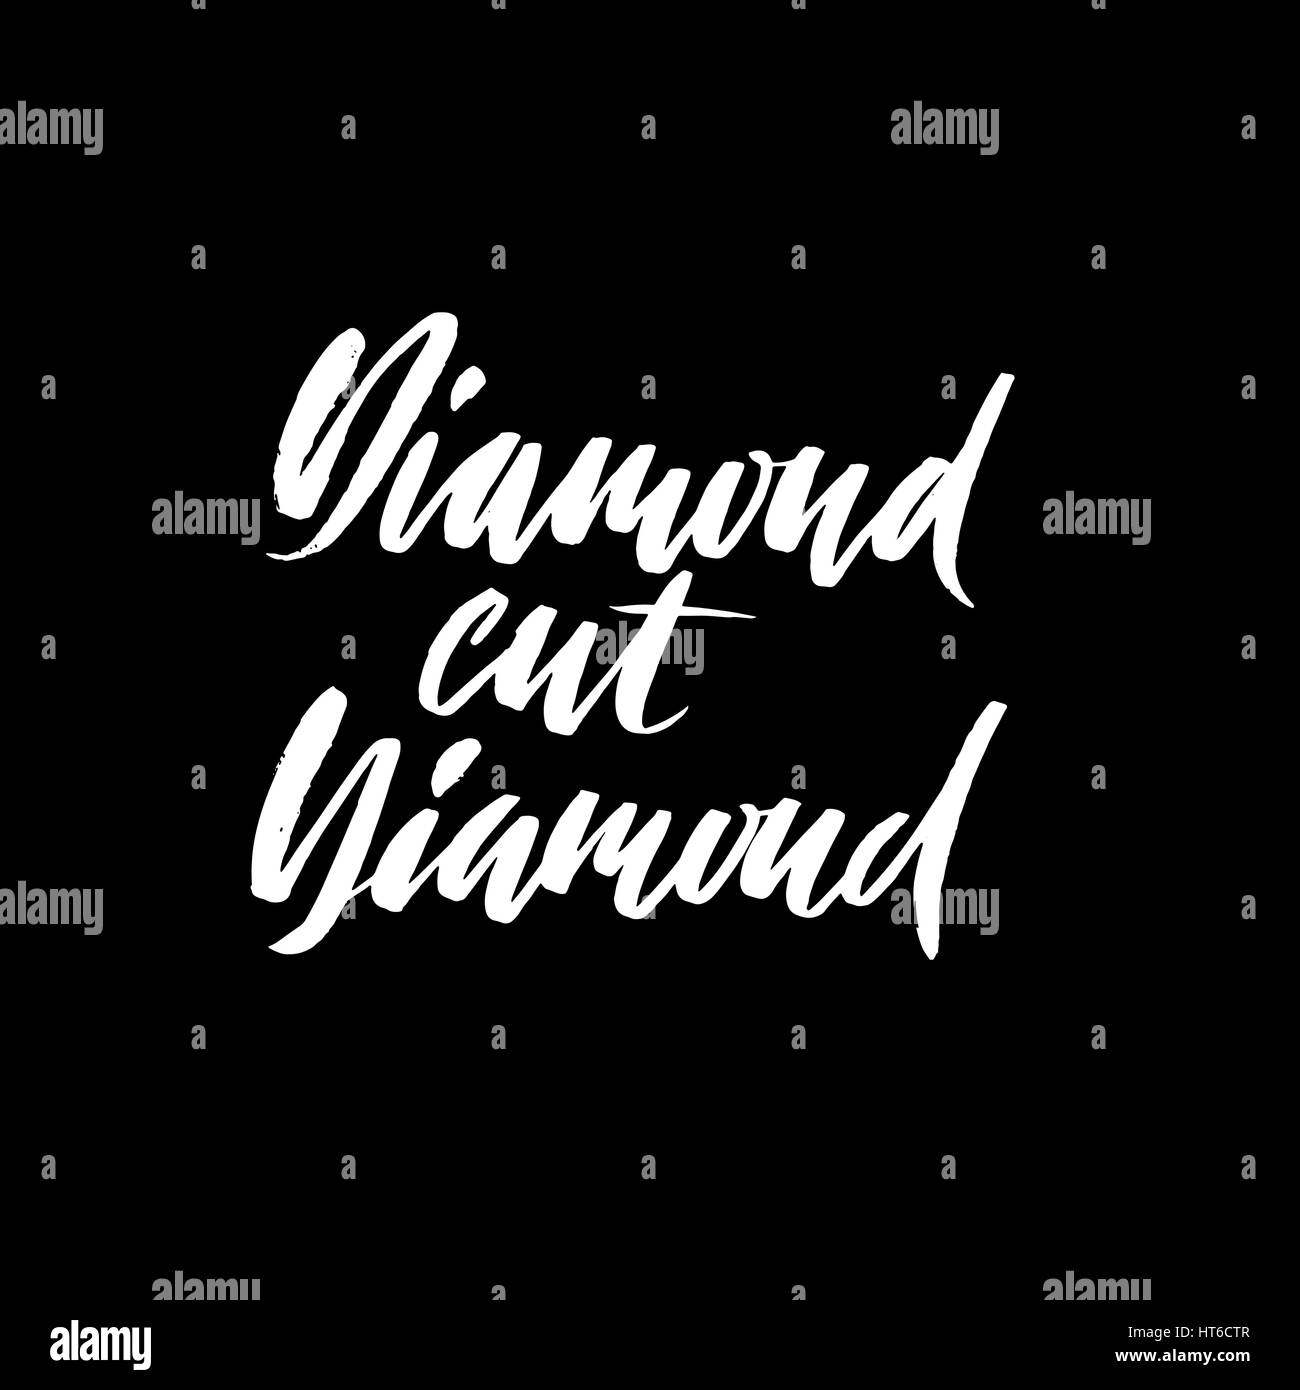 Diamond Cut Diamond Hand Drawn Lettering Proverb Vector Typography Design Handwritten 2878